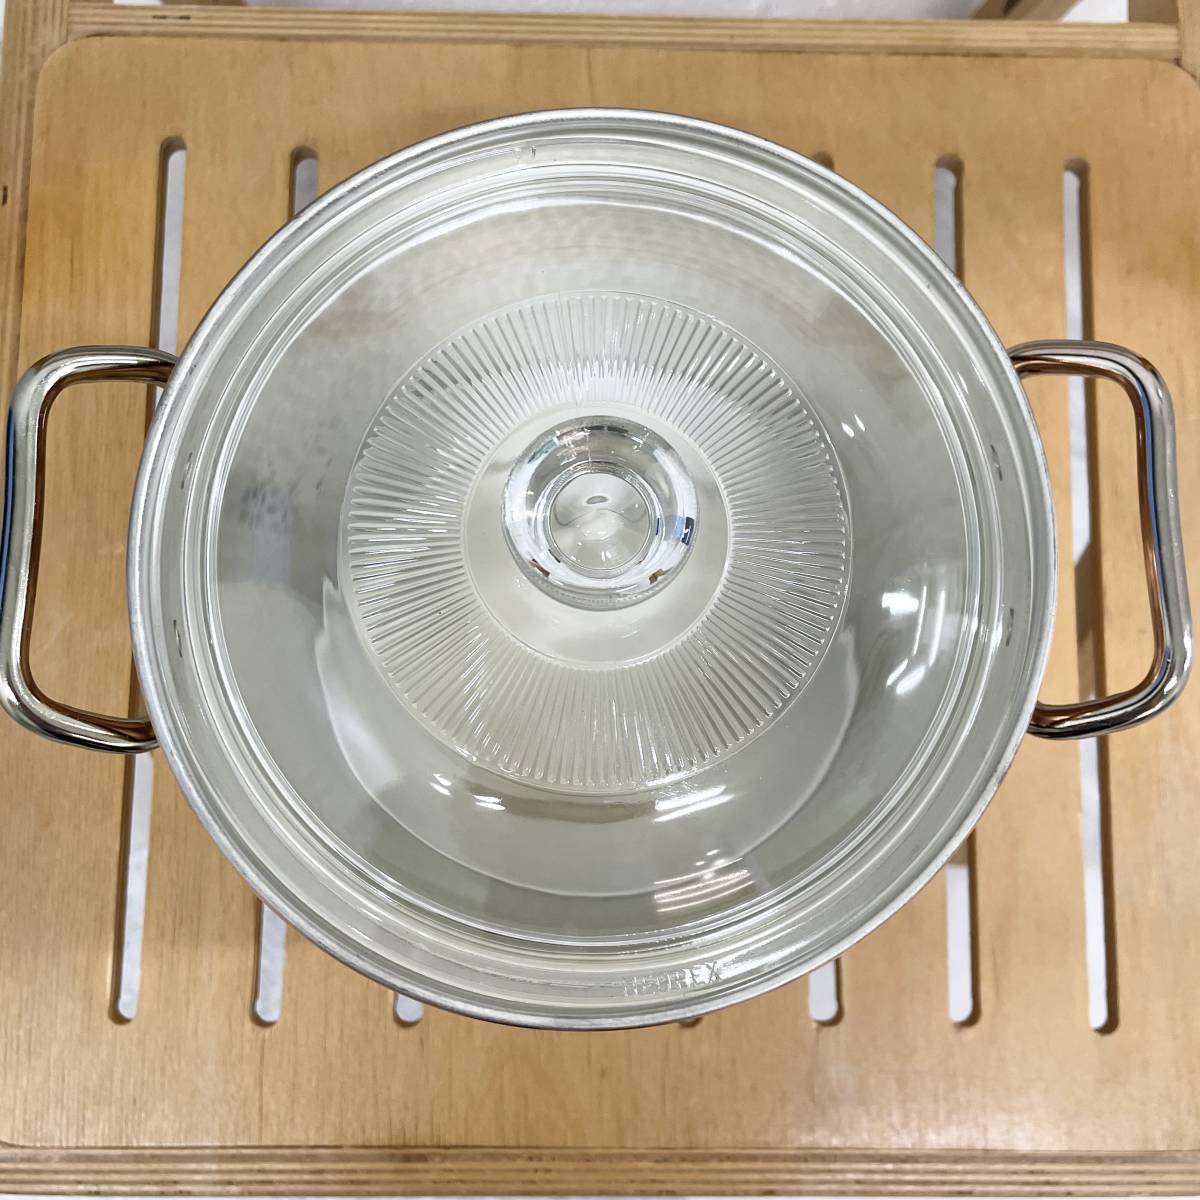 ◆NEOREX 銅鍋 両手鍋 ガラス蓋付 18×14 銅製 料理 煮込み カレー シチュー 調理器具 高熱伝導 管2745_画像3